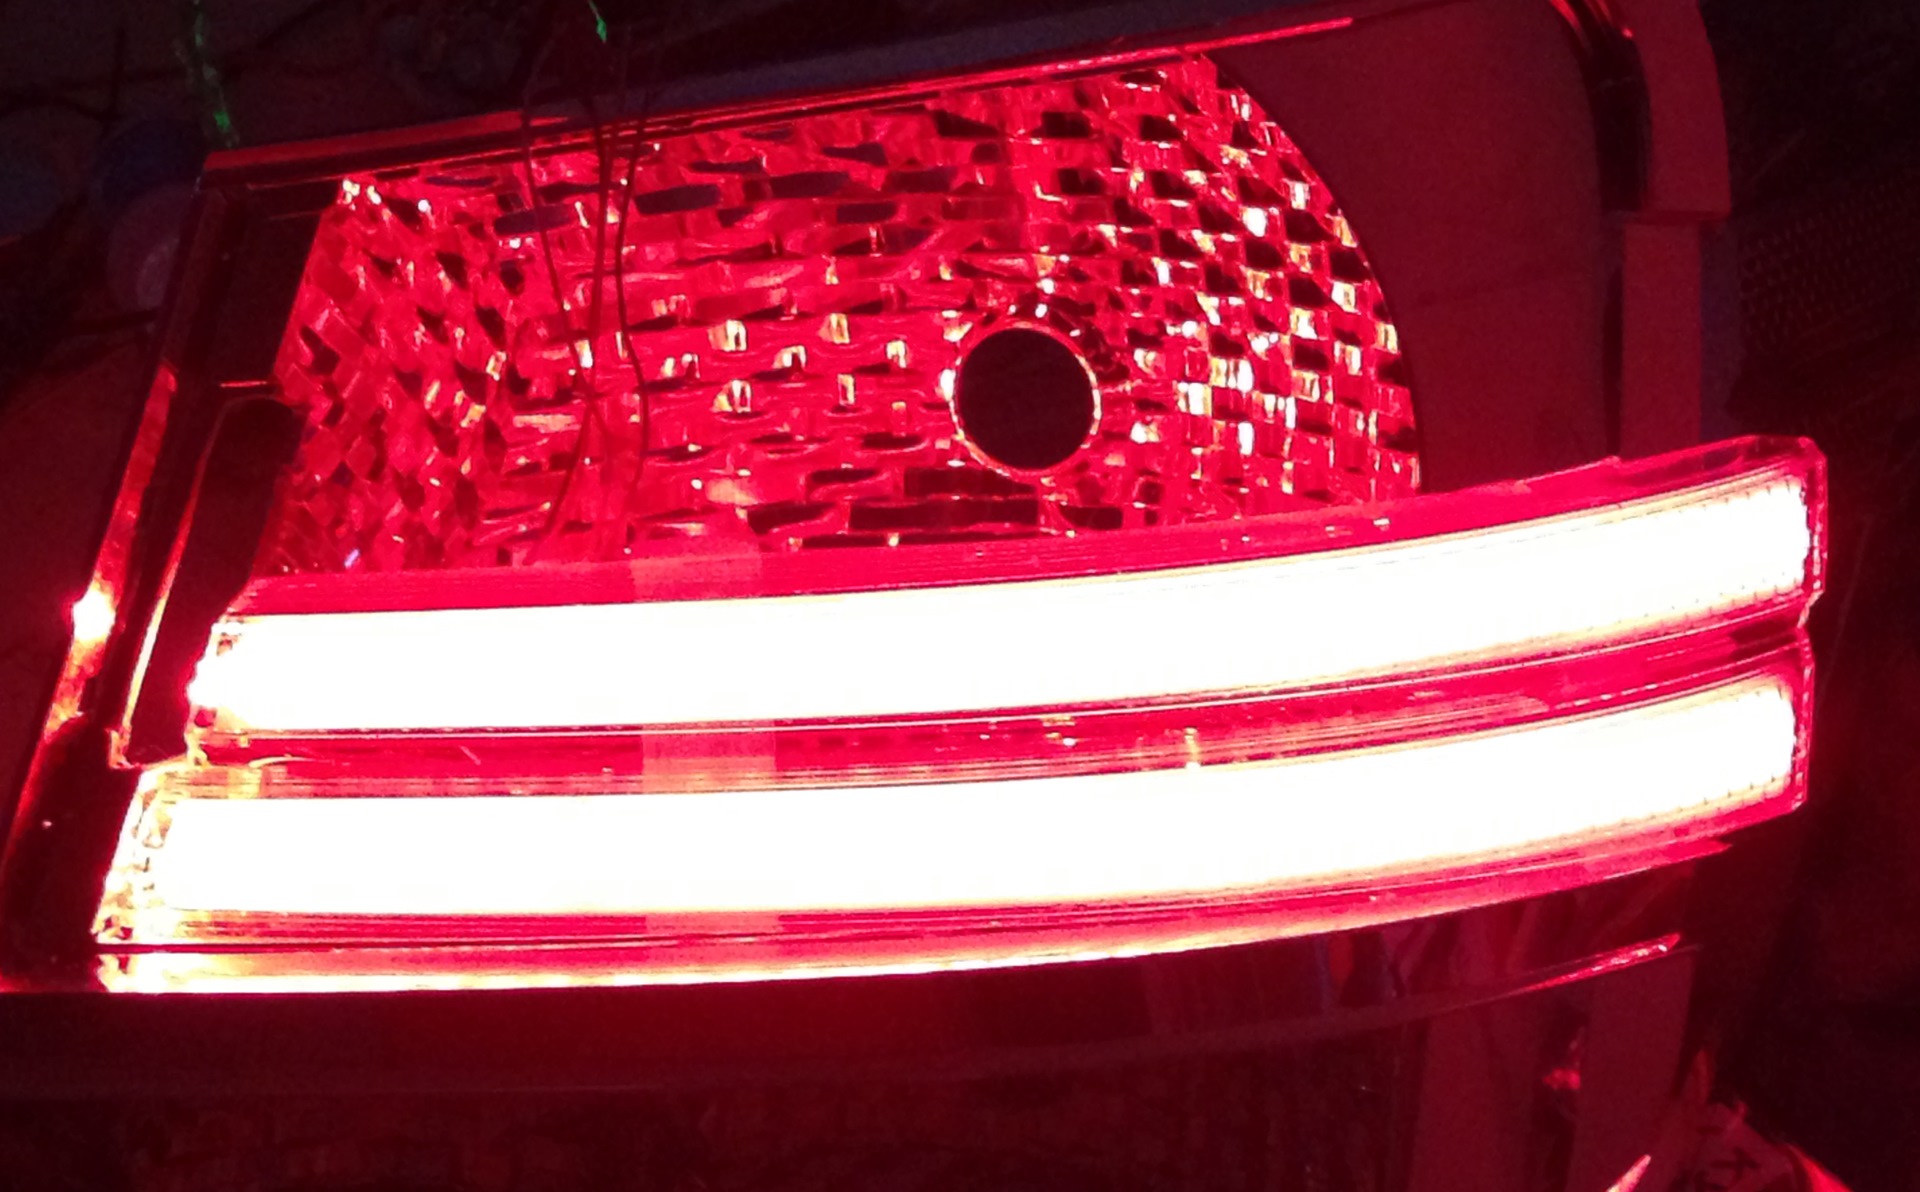 Led tune. Задний фонарь Понтиак Вайб. Светодиодные фонари Legacy BM. Subaru Legacy подсветка задних фонарей. Задние лед фары Понтиак Вайб.